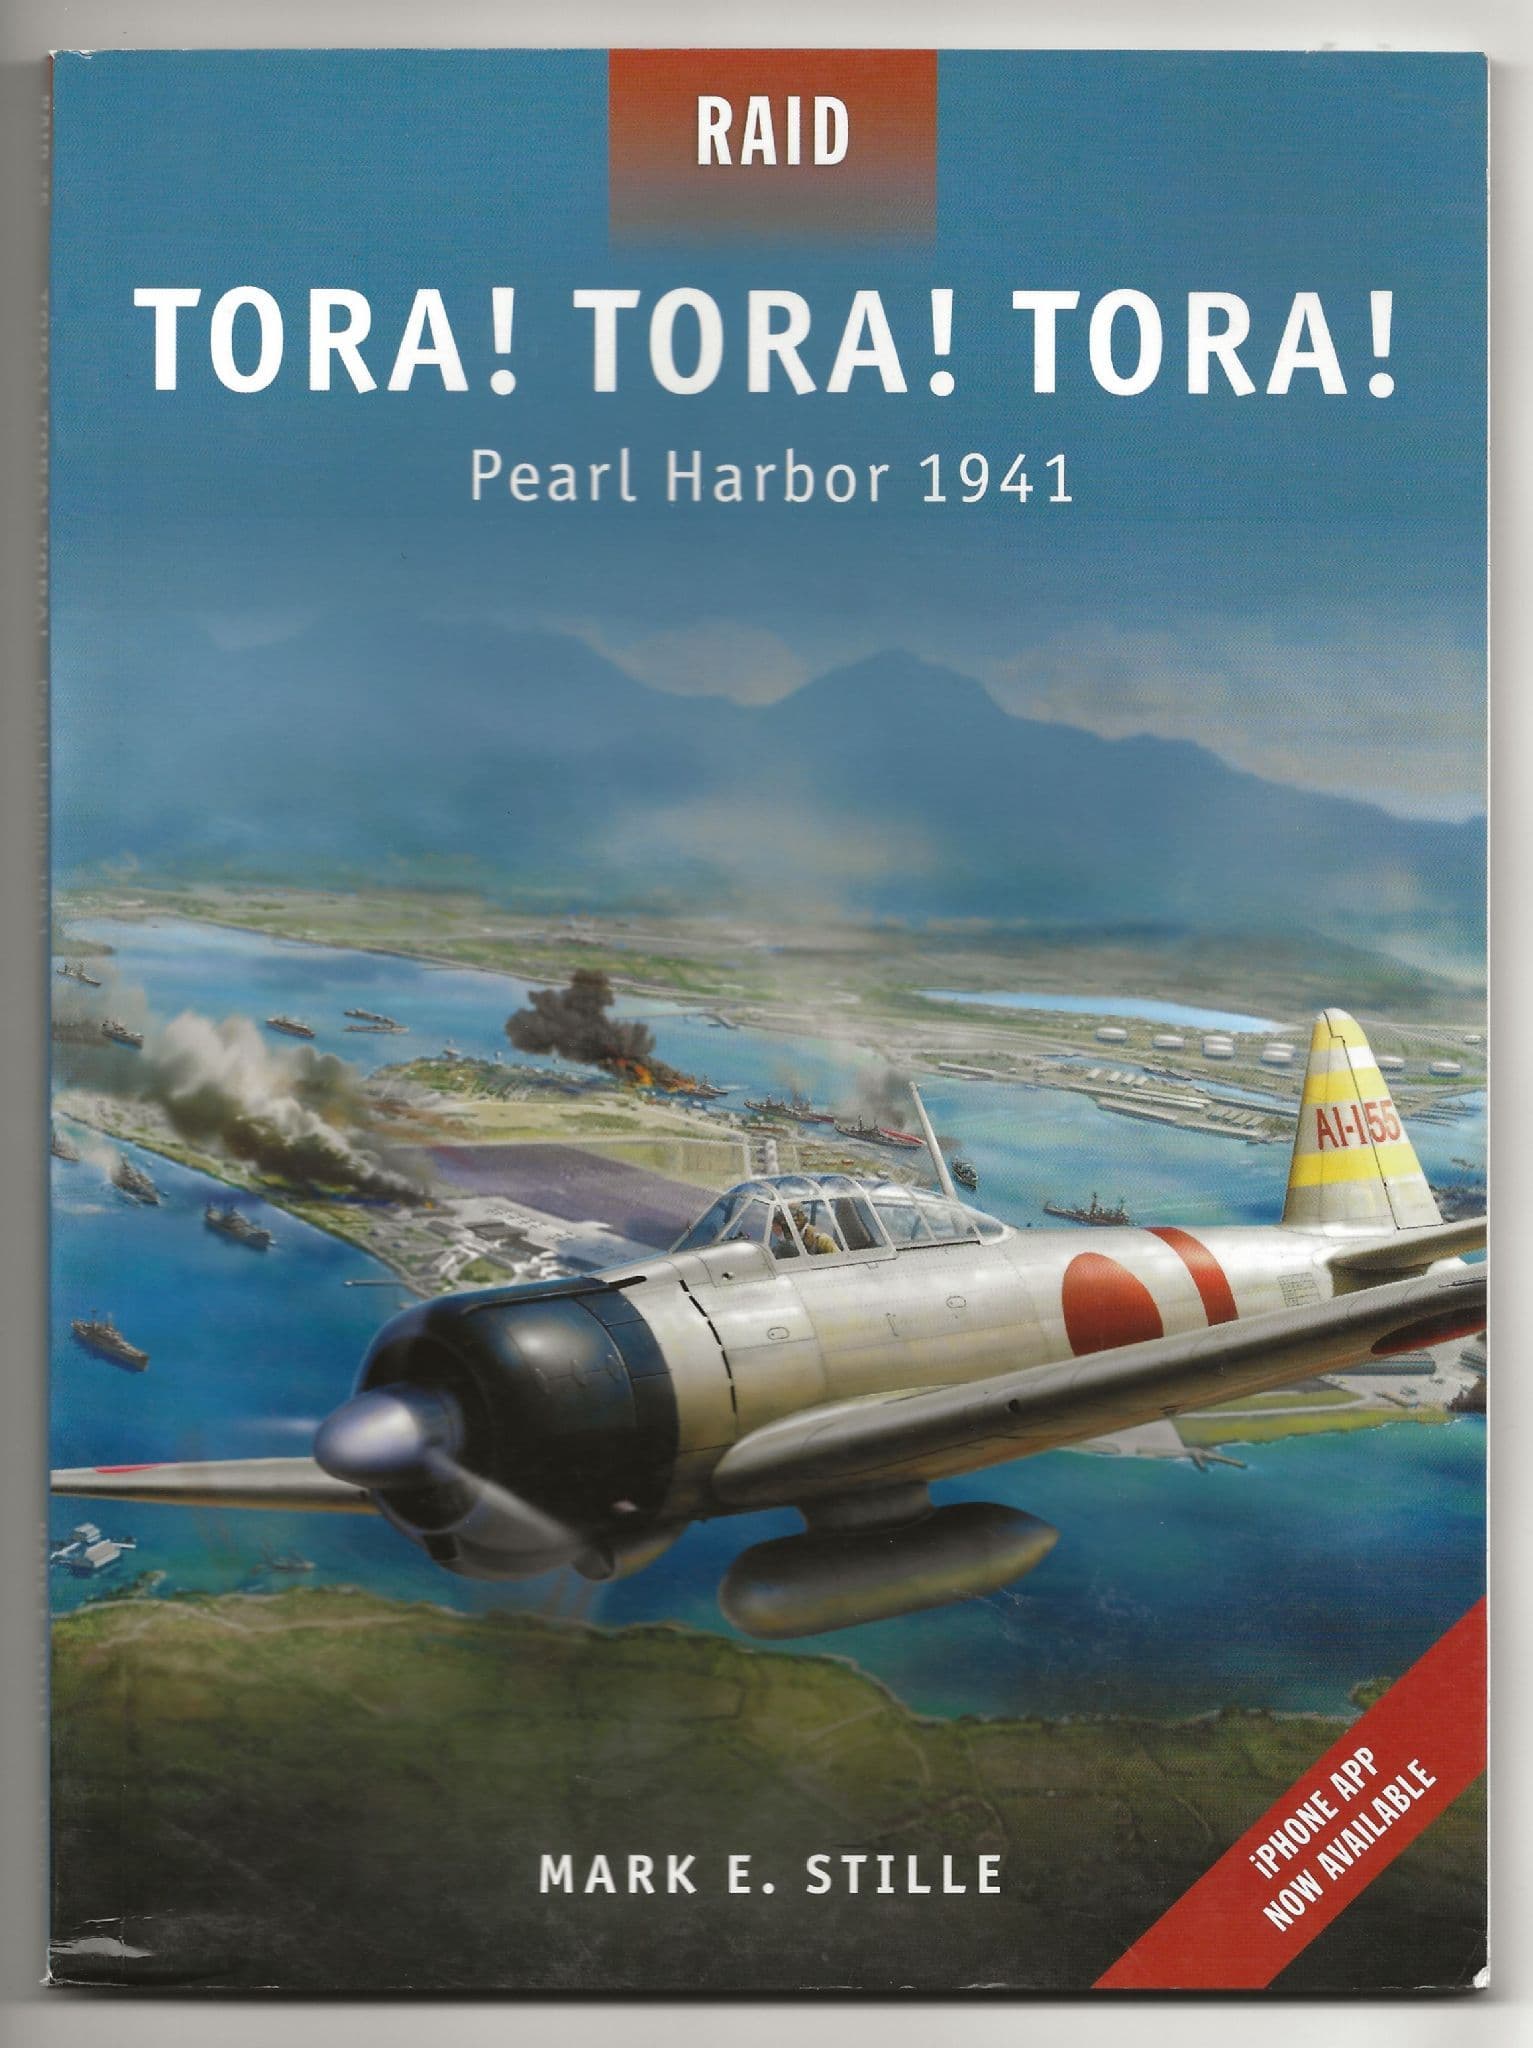 Tora! Tora! Tora! - Pearl Harbor 1941 (Raid)